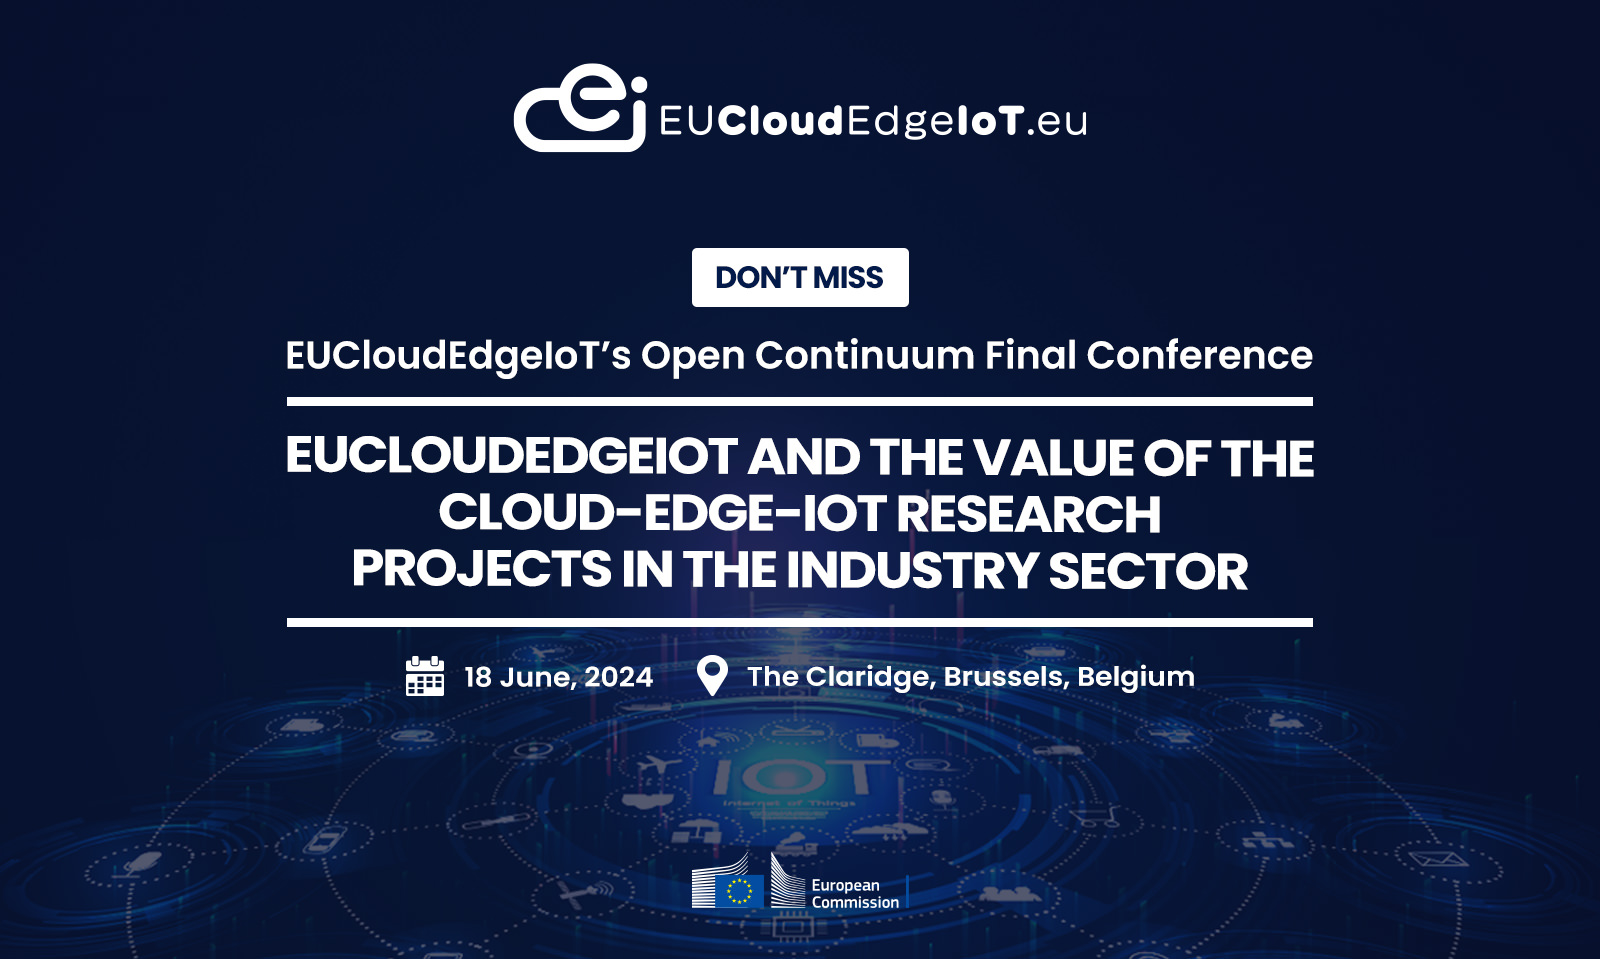 EMPYREAN at the Final EUCloudEdgeIoT Open Continuum Conference